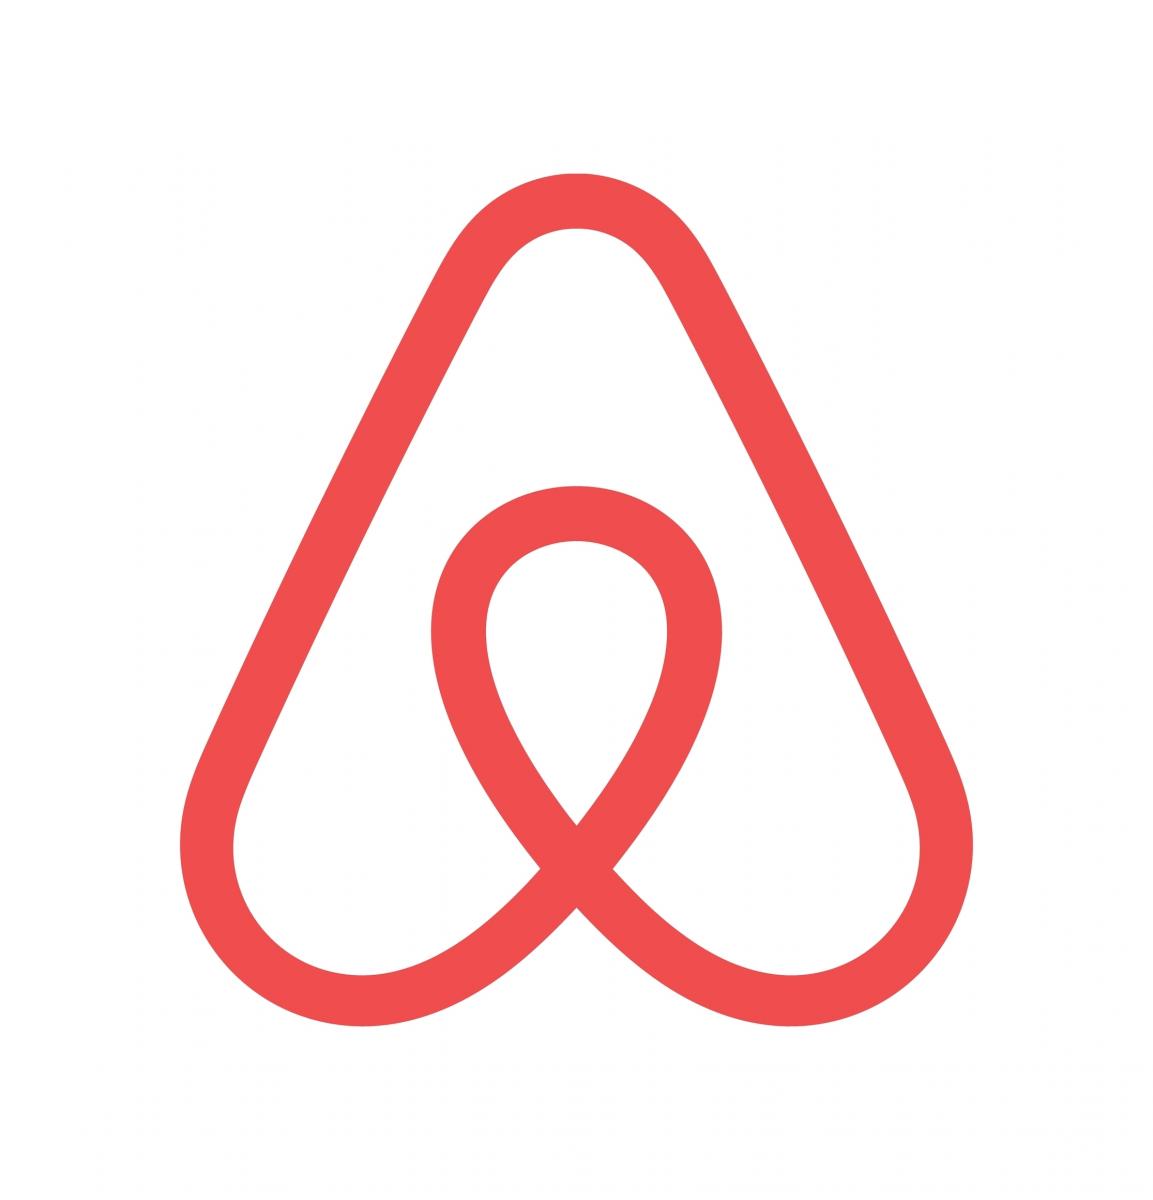 Airbnb fights back against Sadiq Khan’s call for clampdown